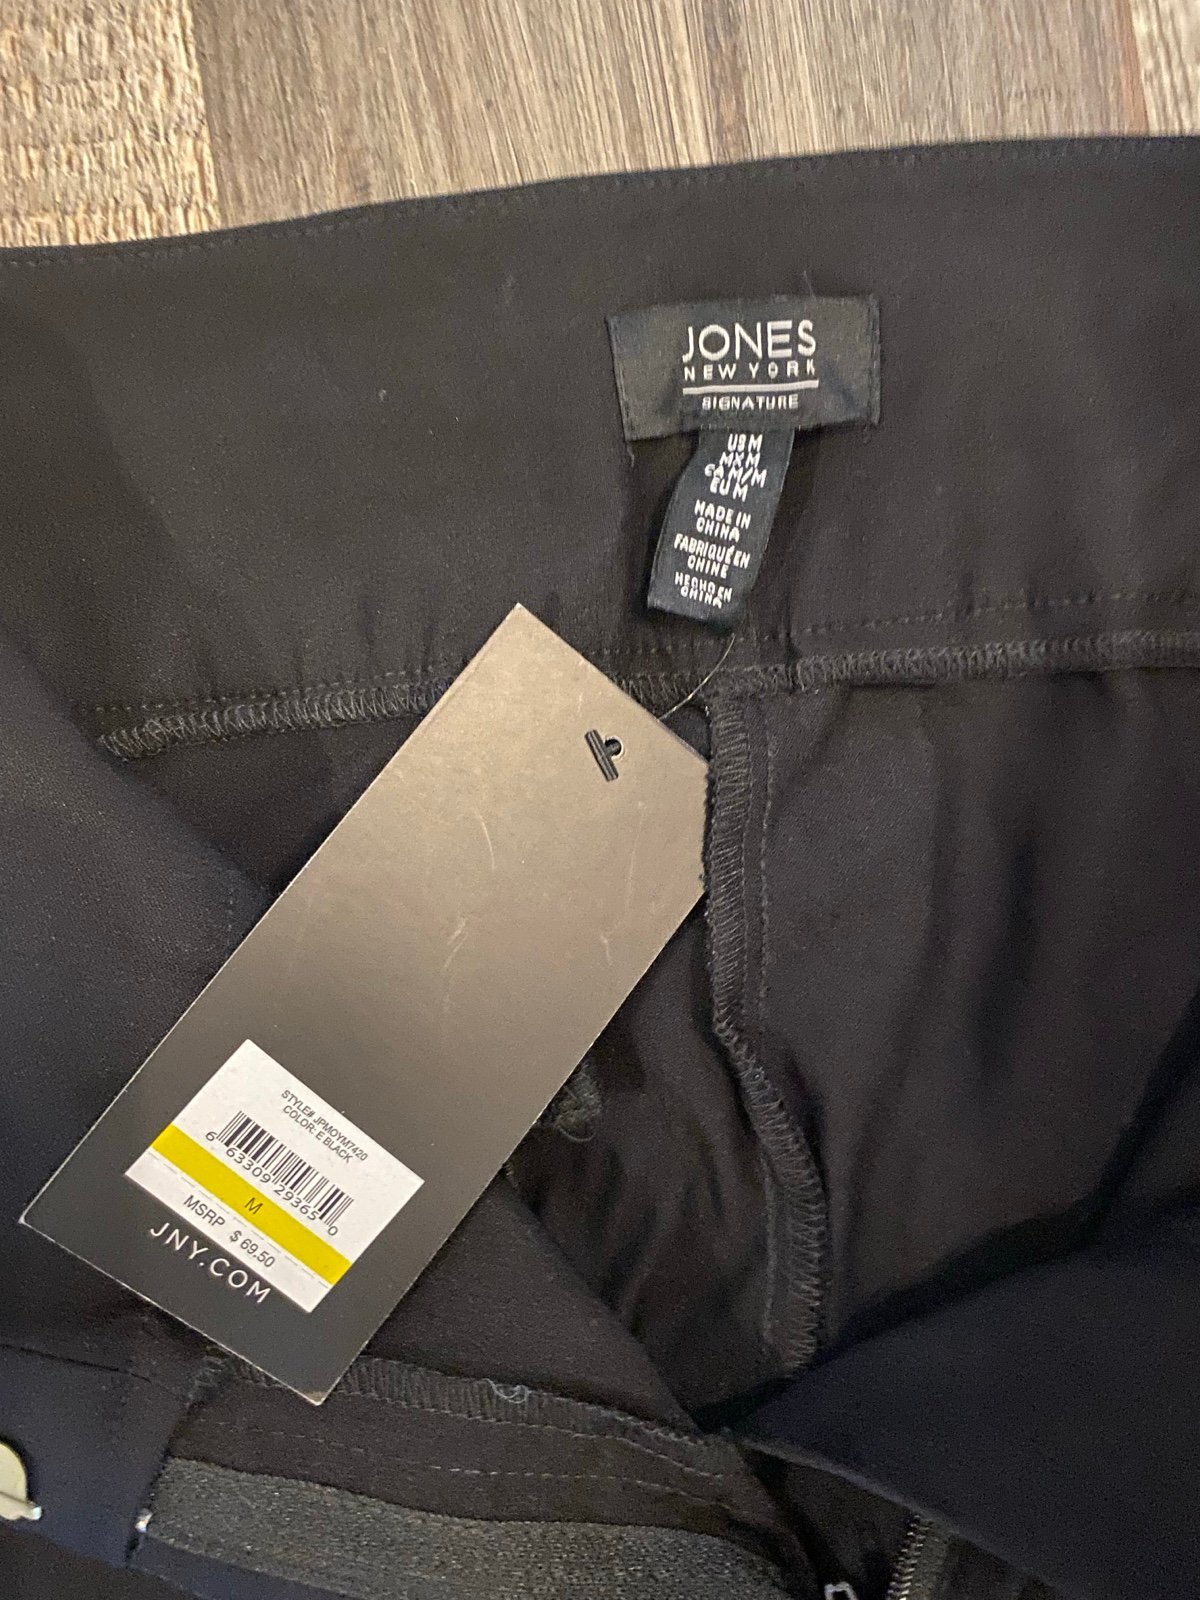 Nice Jones, New York pants pJNBdHCu5 just buy it